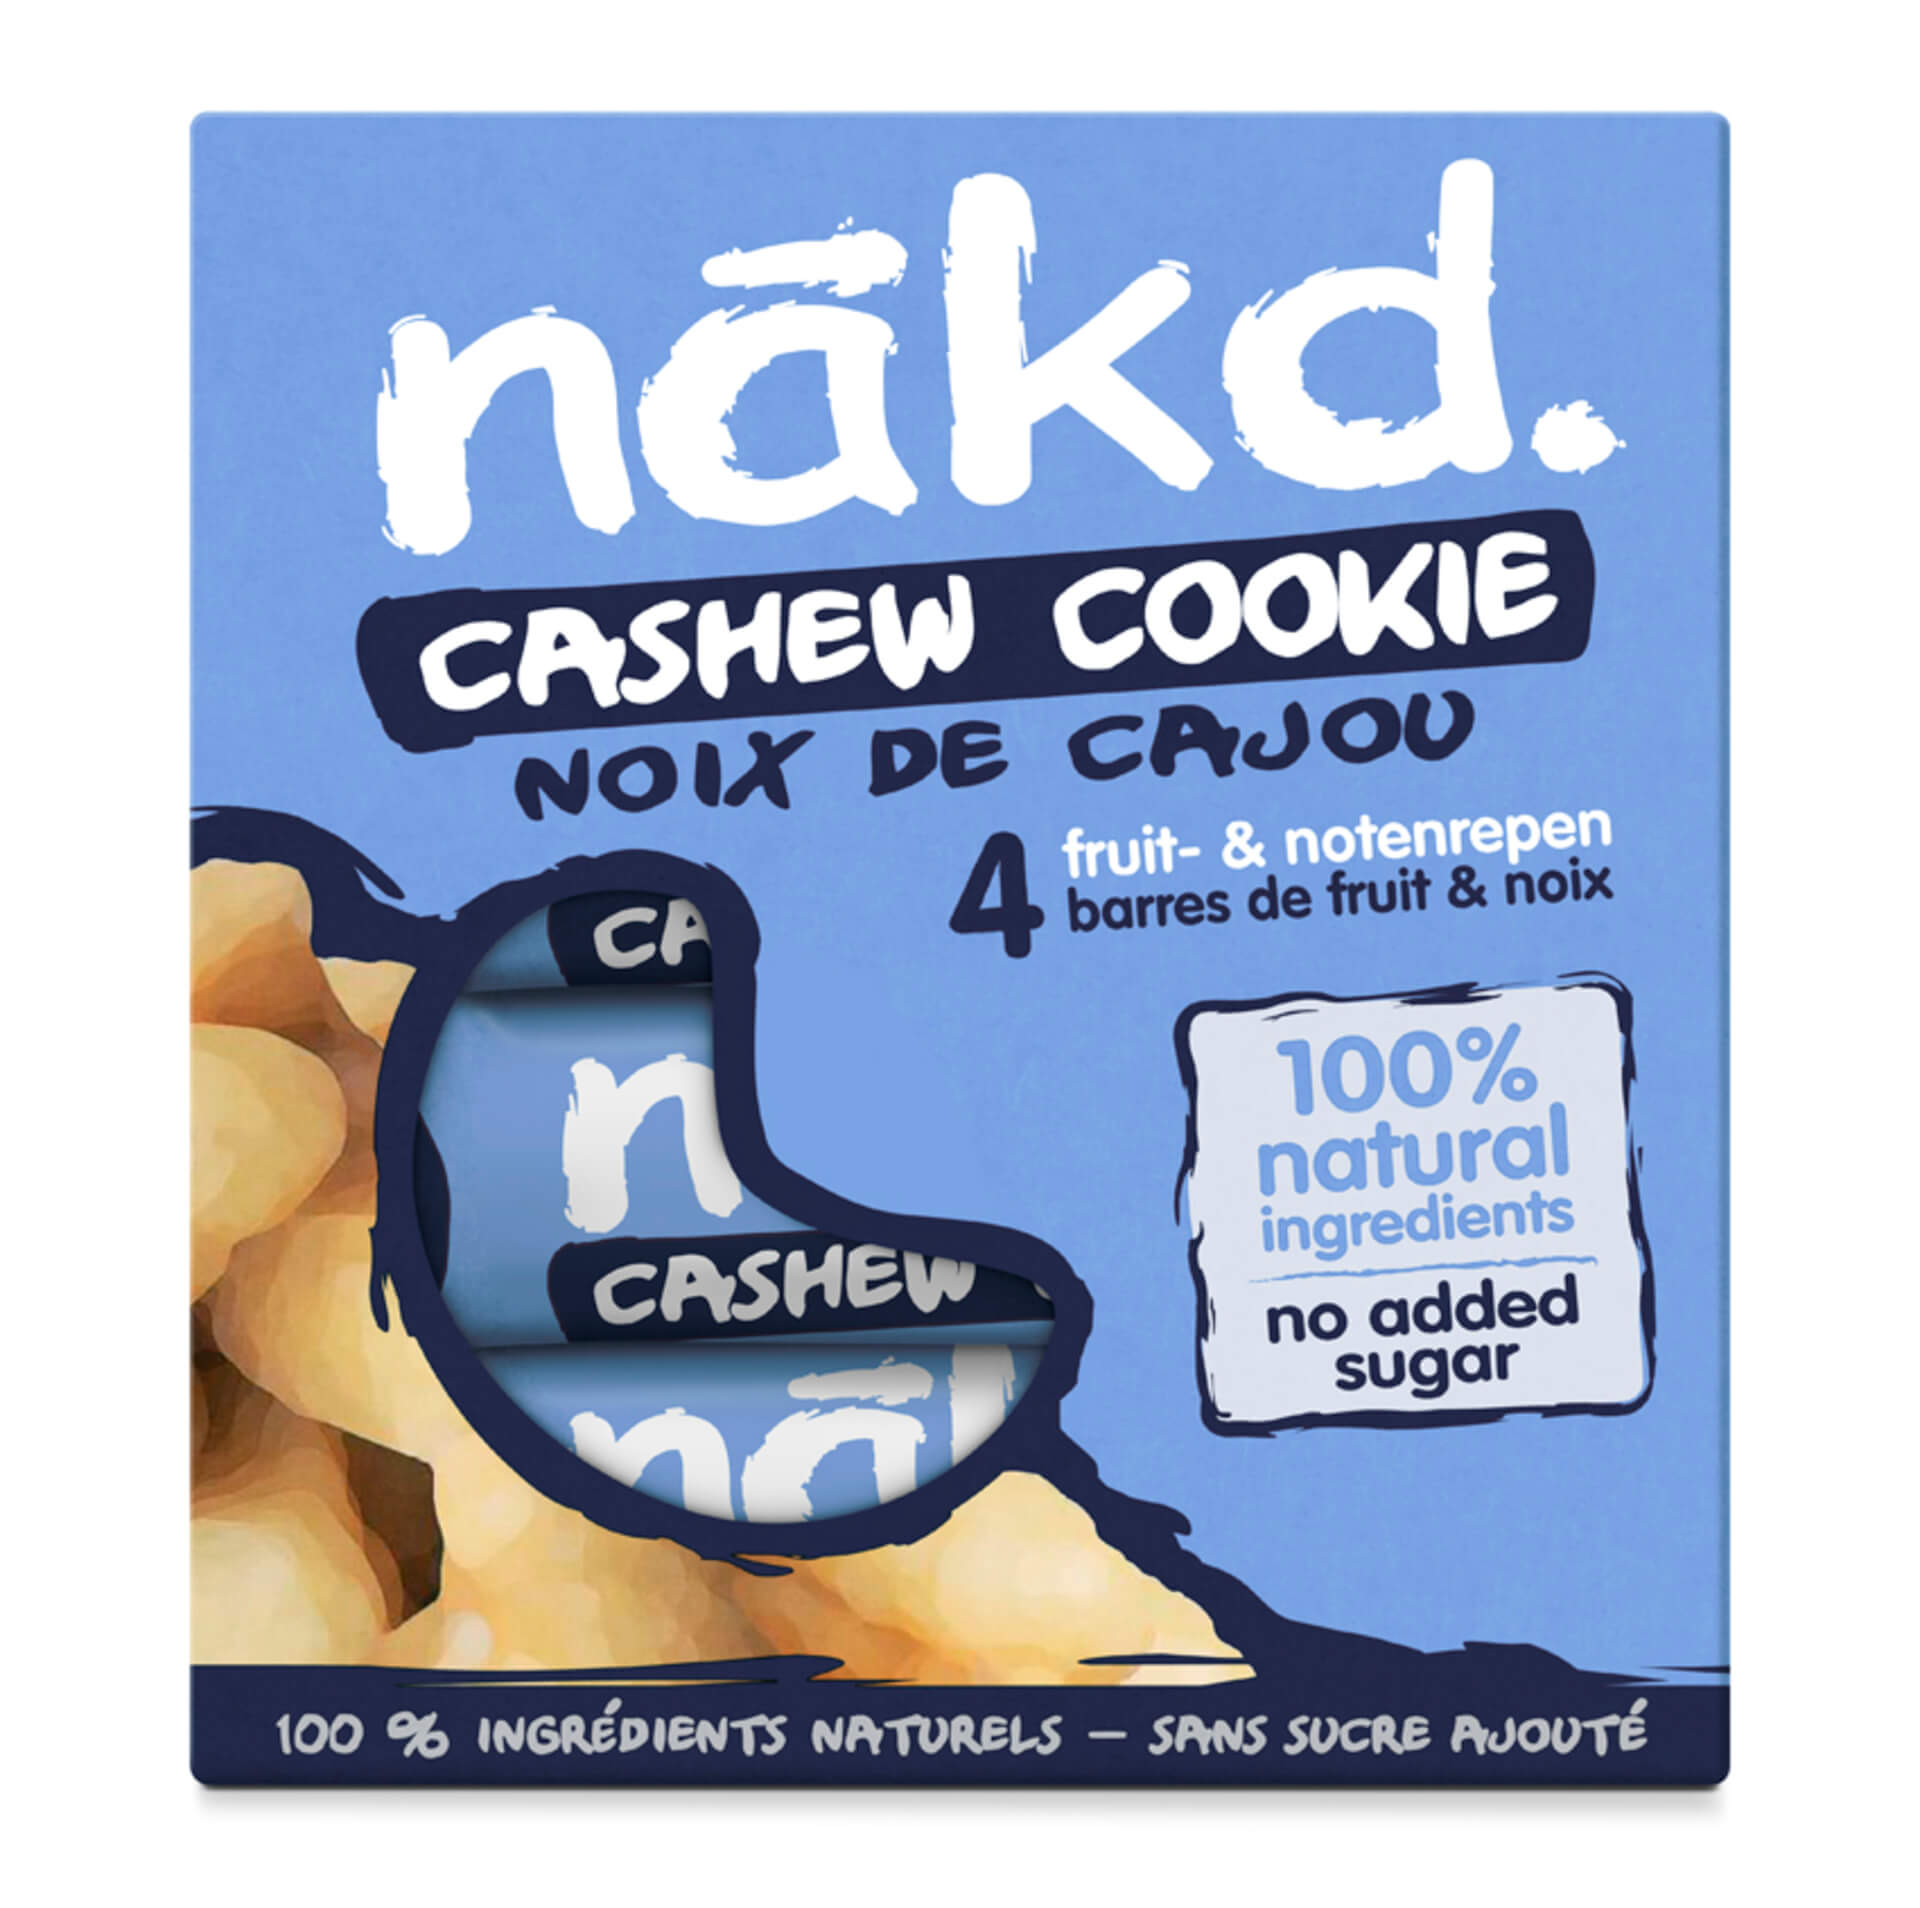 Nakd Cashew cookie 4 x 35 g - expirace